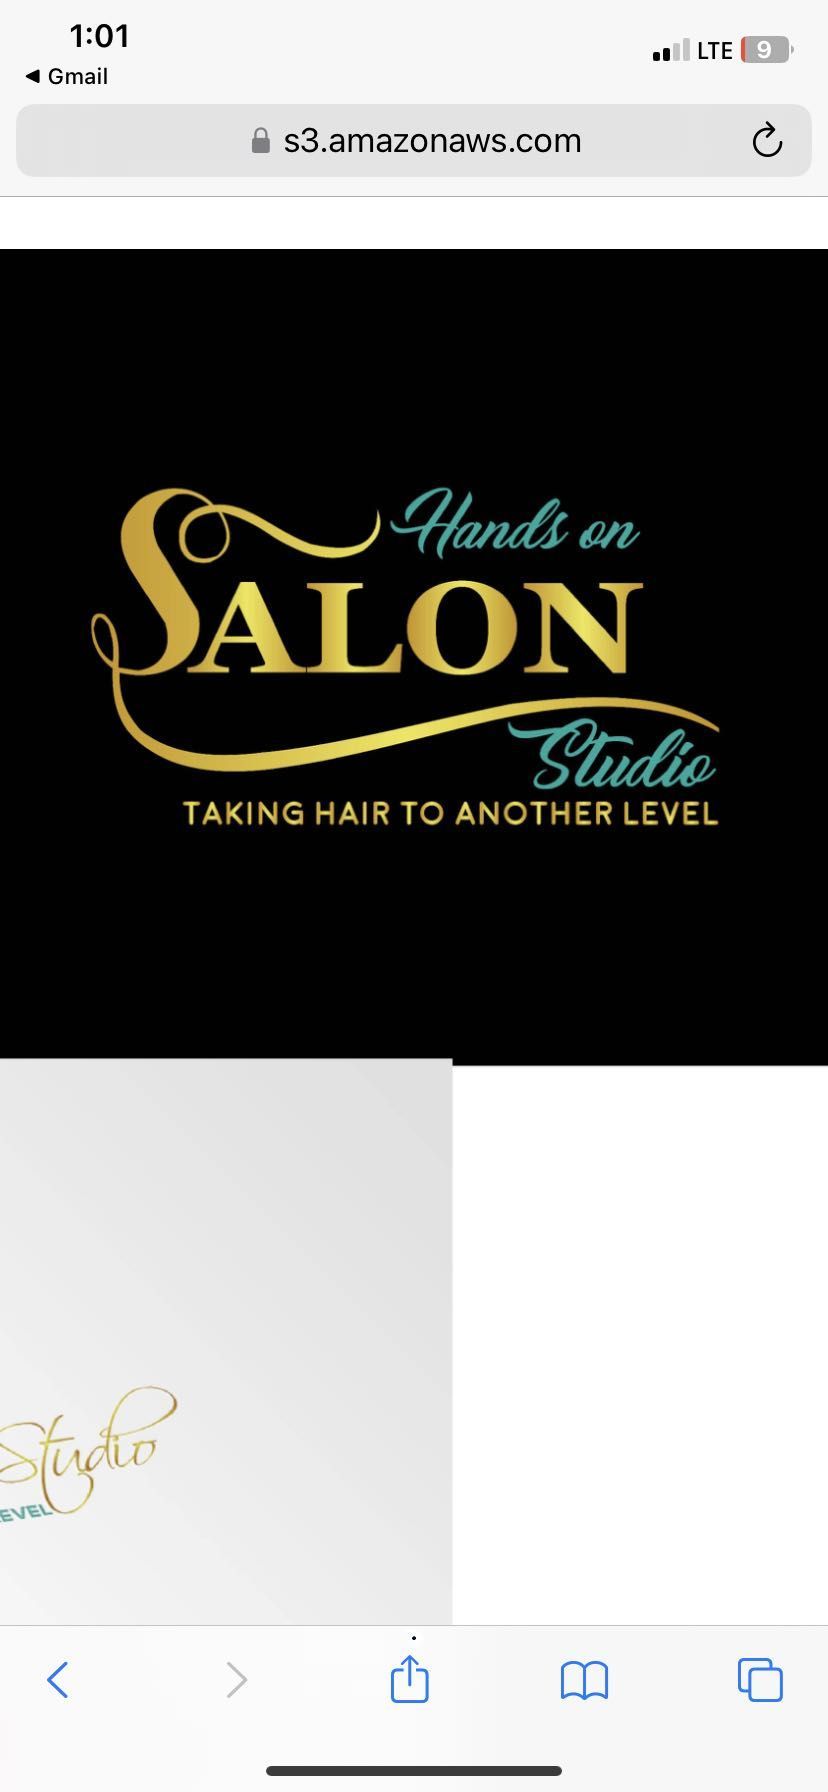 Hands on Salon Studio, 274 N Main St Ste.C, Jonesboro, GA, 30236